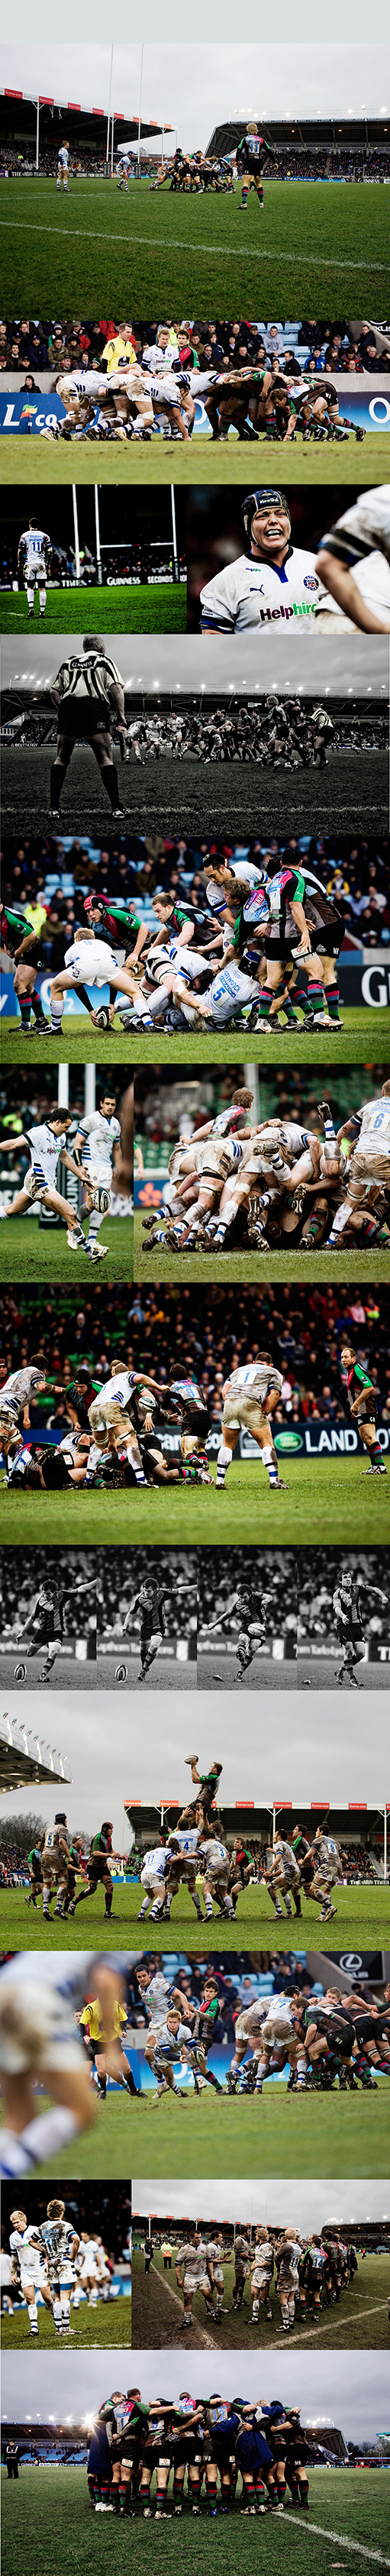 Adobe Portfolio Harlequins Rugby  sports photography